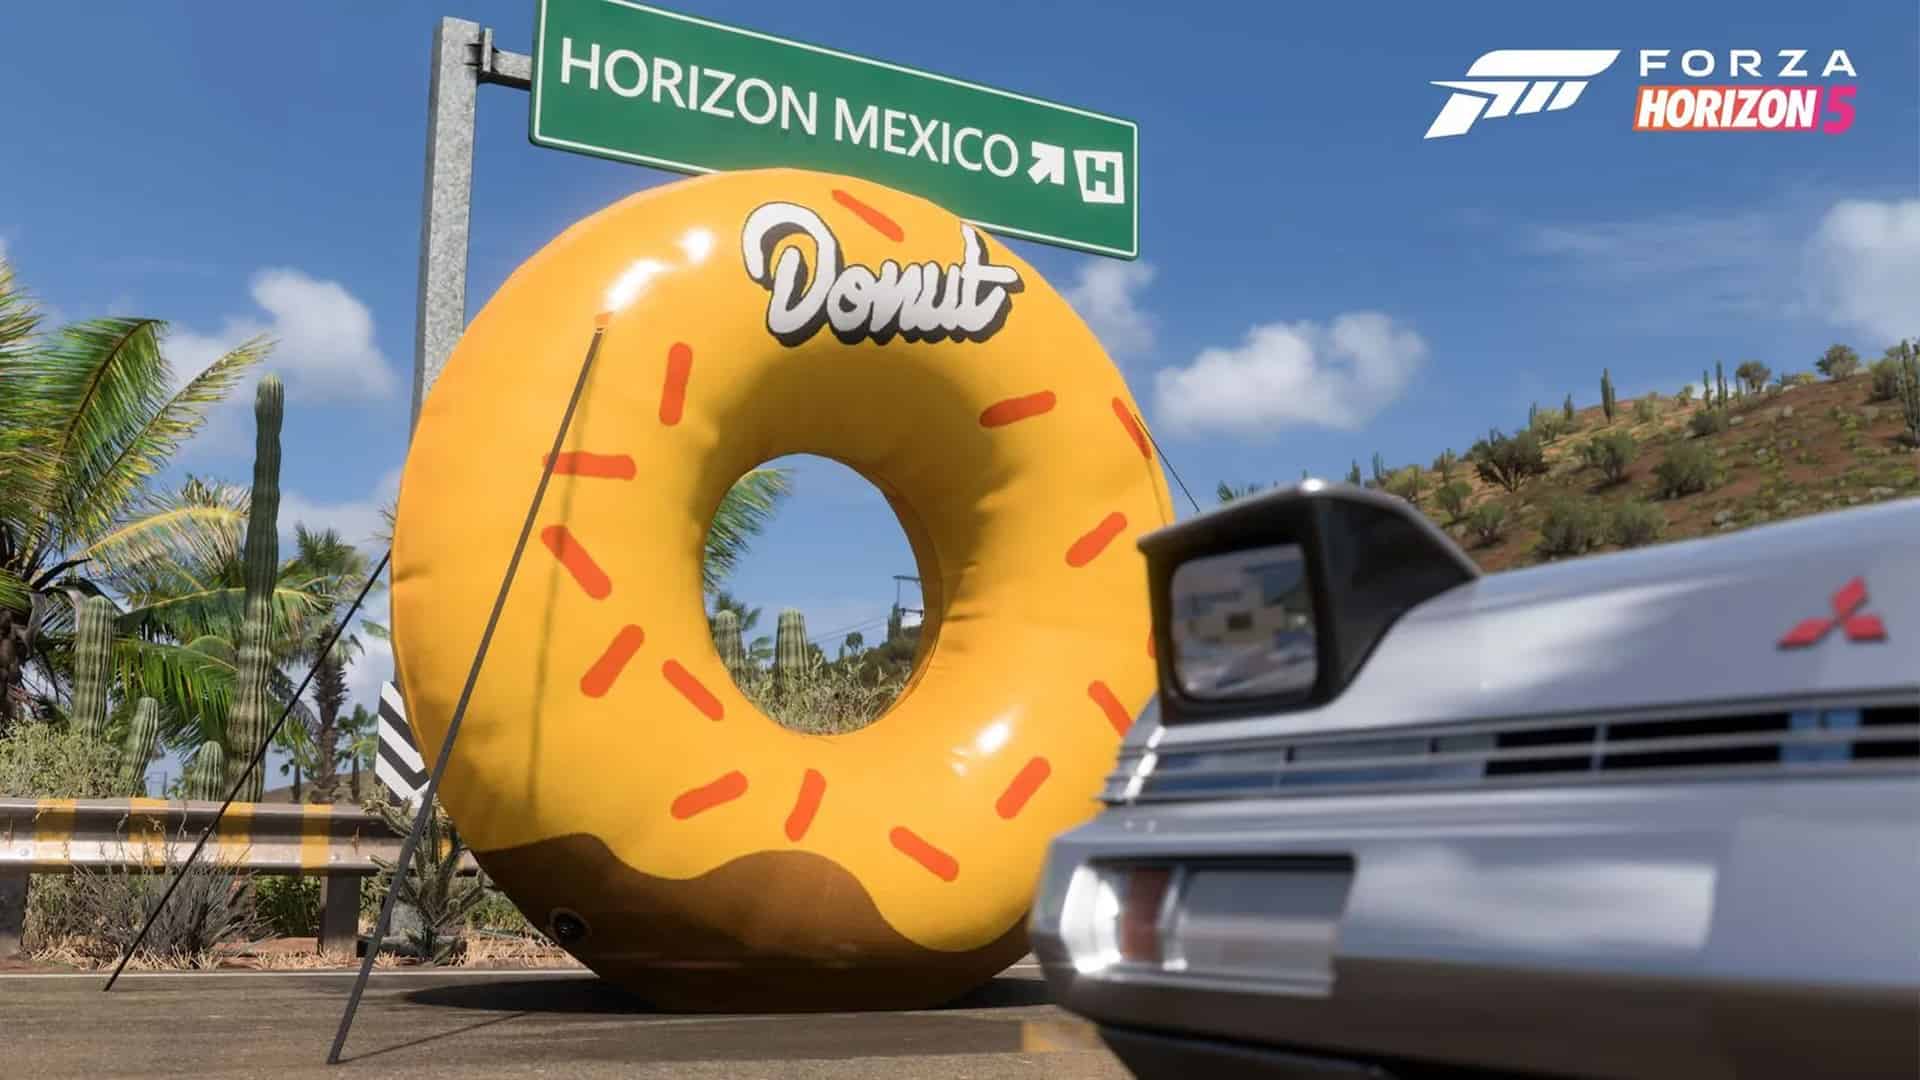 Buy Forza Horizon 5 - Tankito Doritos Suit (DLC) Xbox key! Cheap